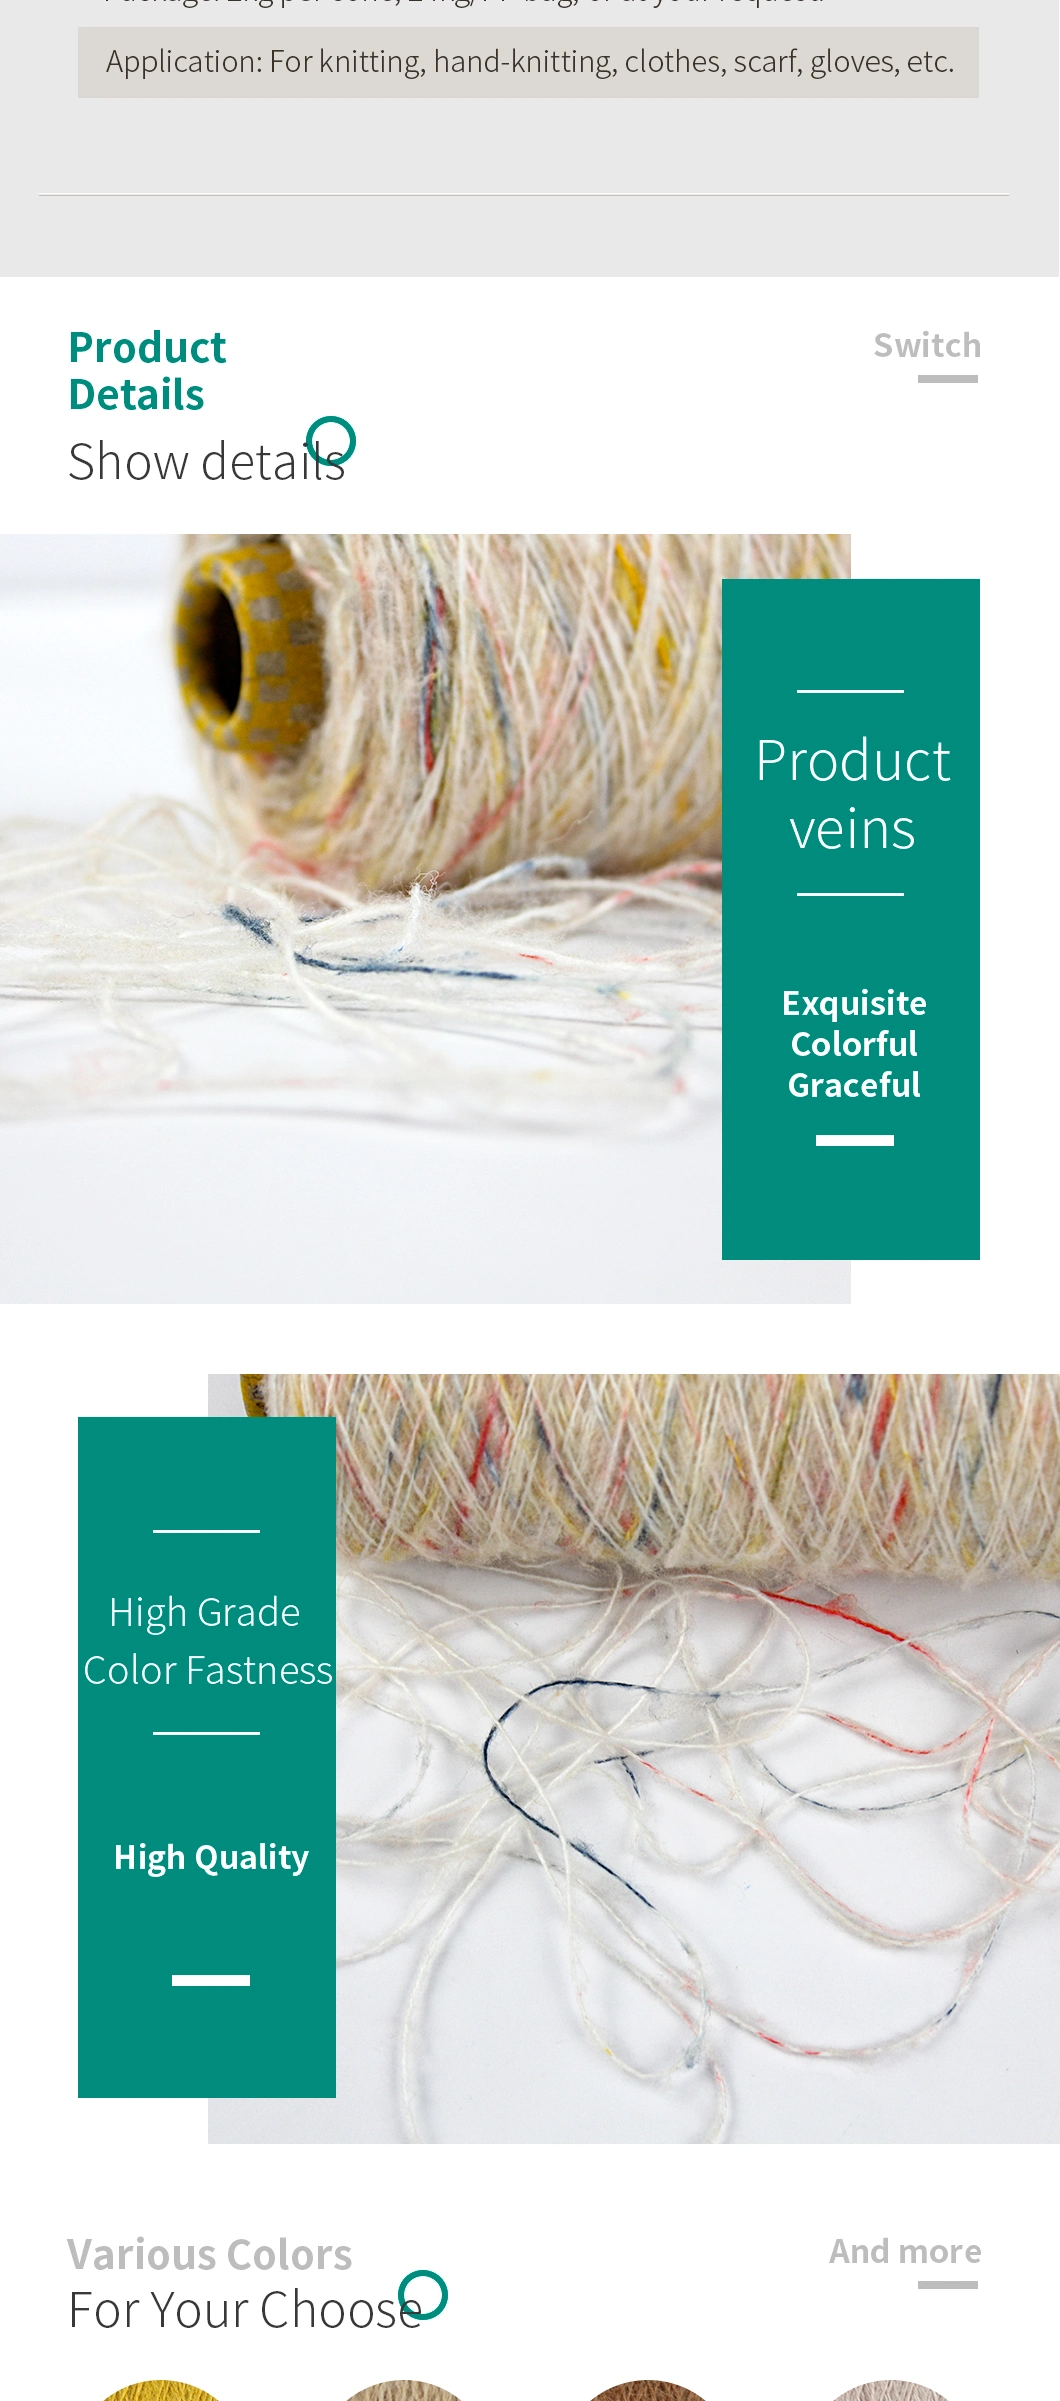 Kingeagle Wool Mohair Yarn for Knitting and Crochet 5.5nm